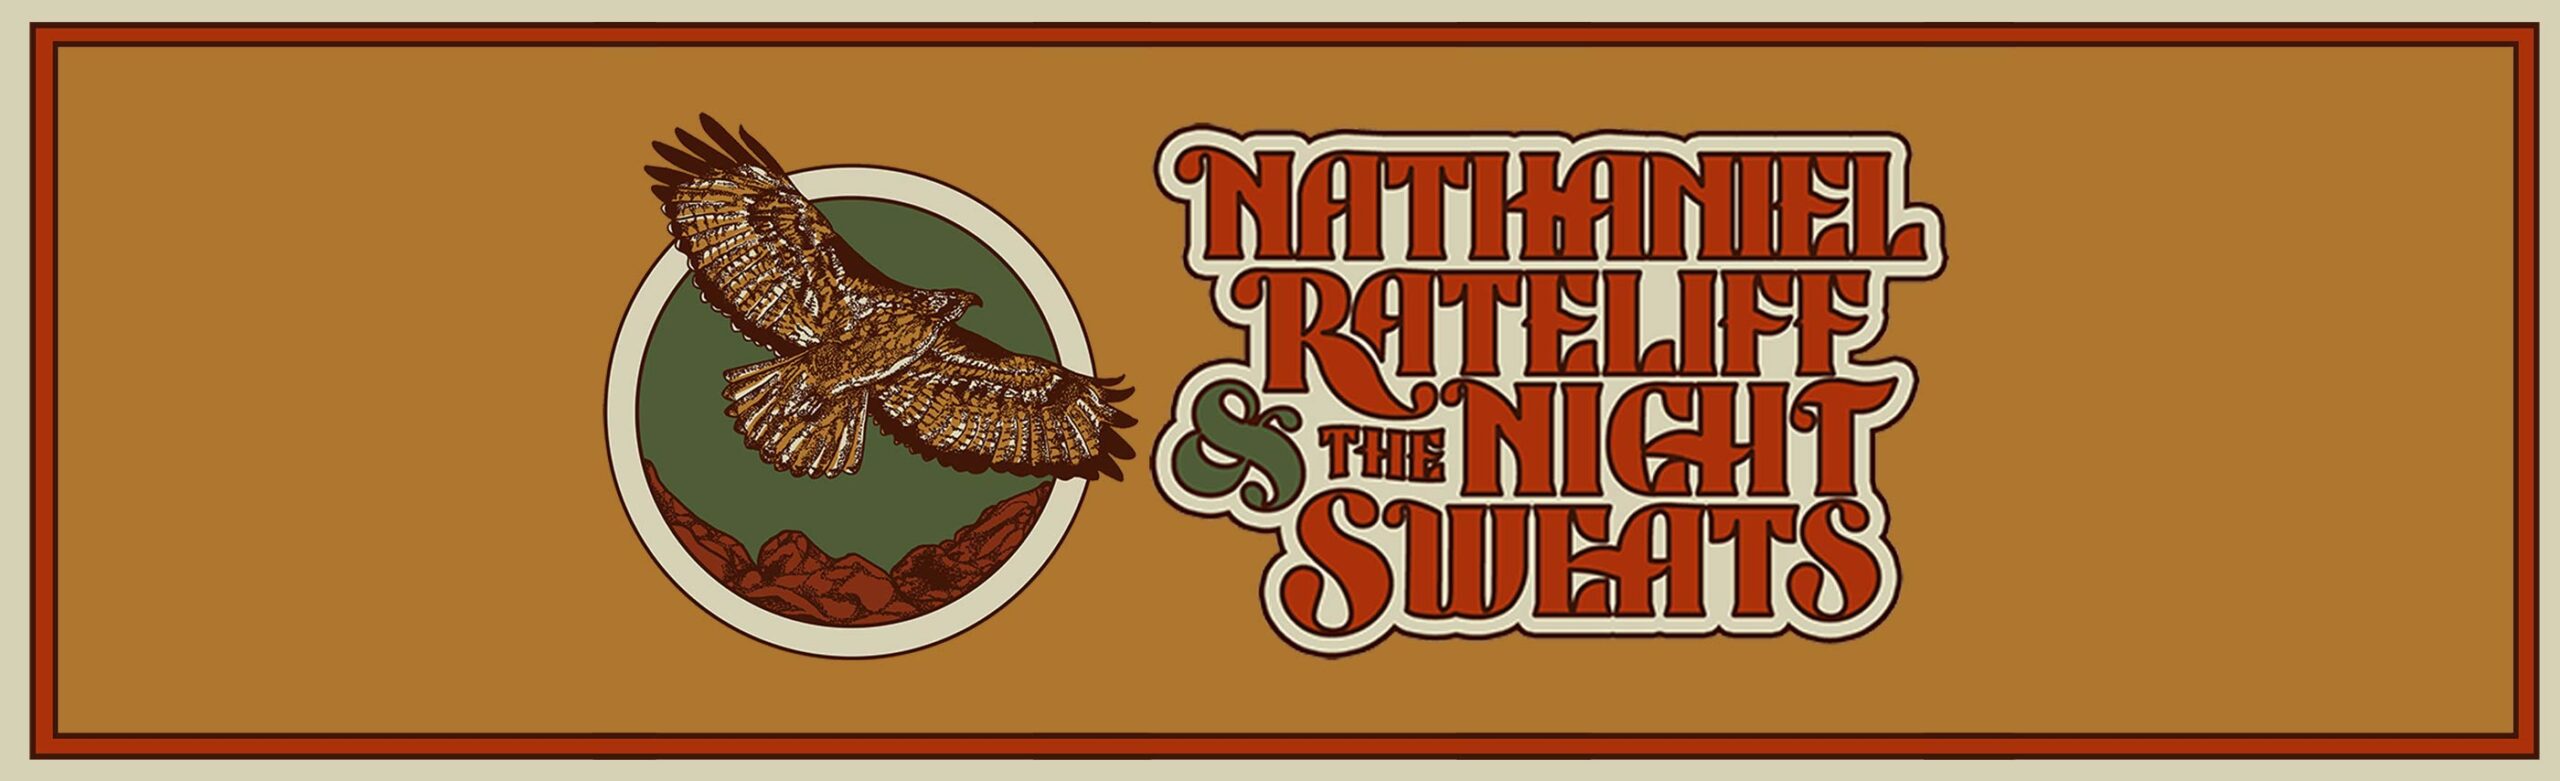 Nathaniel Rateliff & The Night Sweats (Night 1)